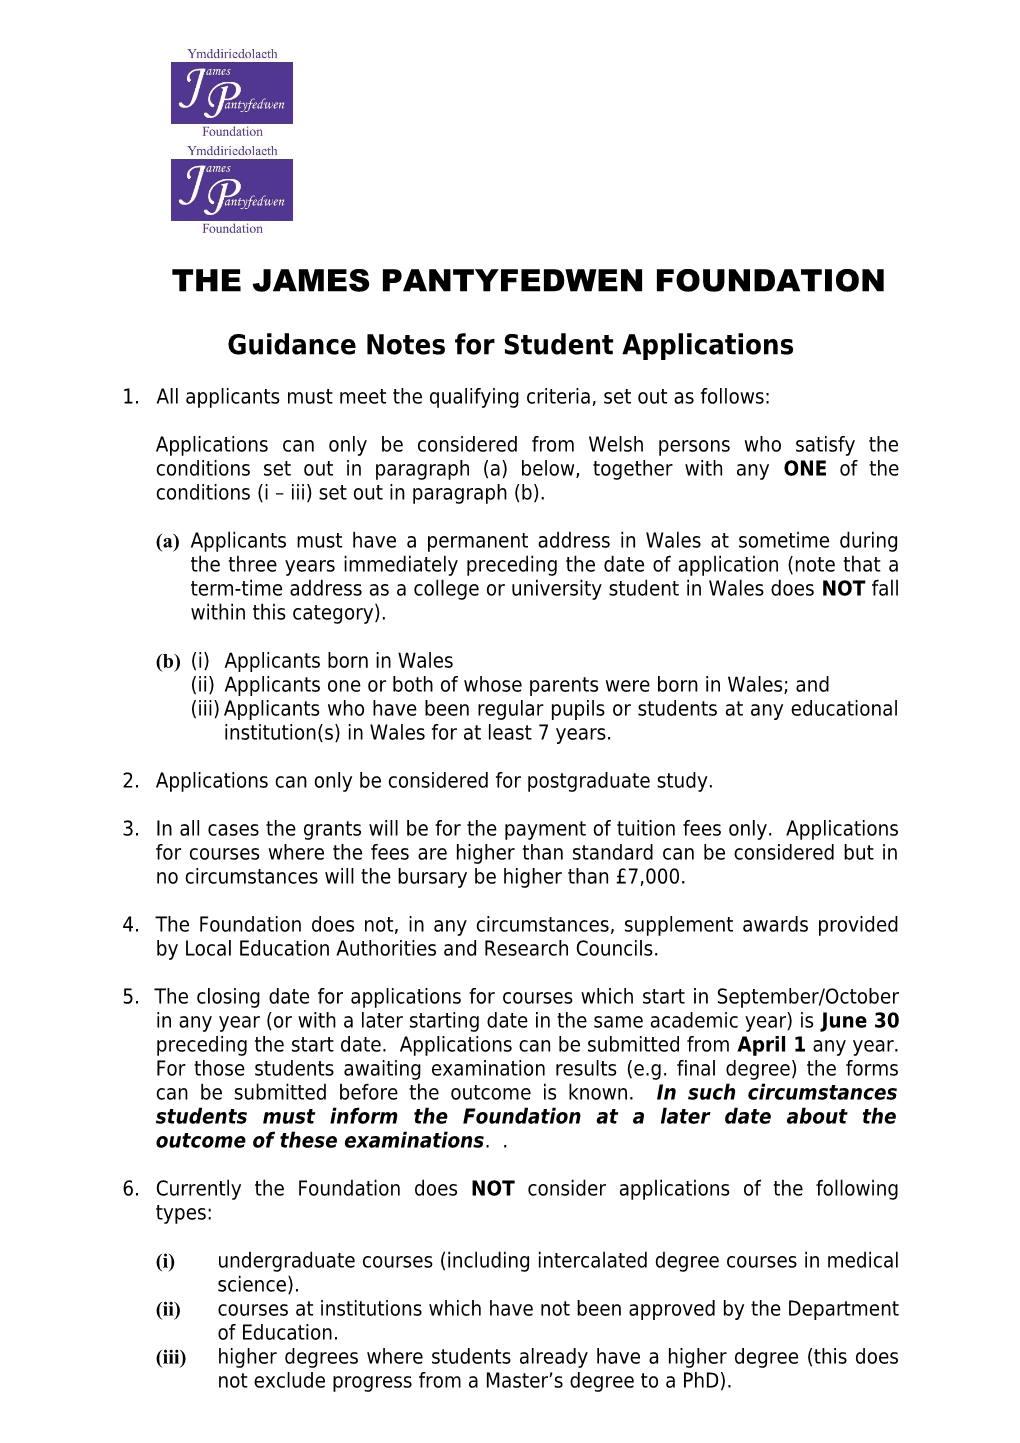 The James Pantyfedwen Foundation